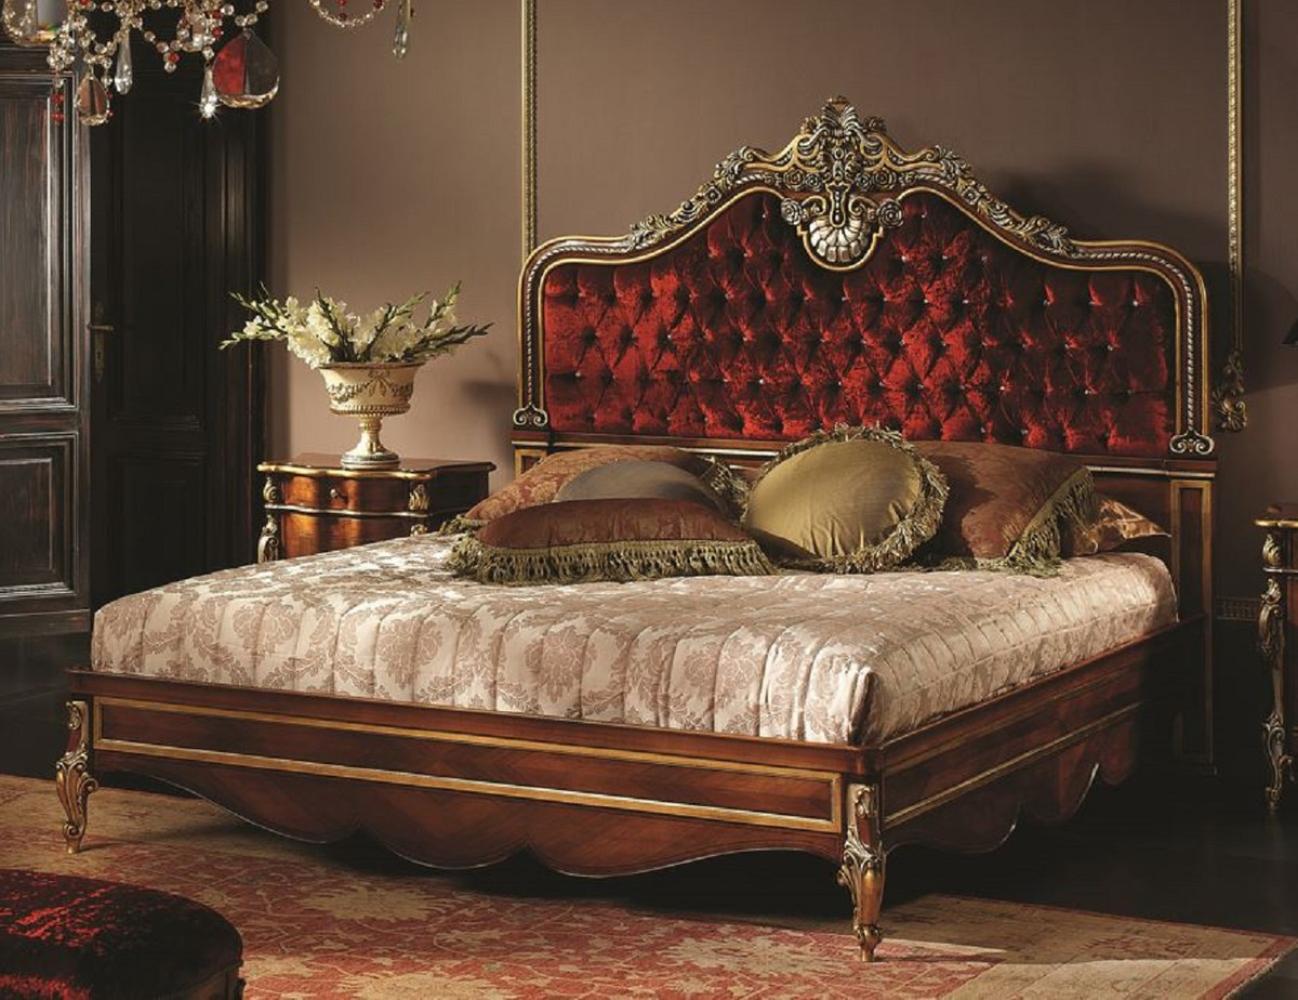 Casa Padrino Luxus Barock Doppelbett Bordeauxrot / Braun / Gold / Silber - Prunkvolles Massivholz Bett mit Swarovski Kristallglas - Barock Schlafzimmer Möbel - Luxus Qualität - Made in Italy Bild 1